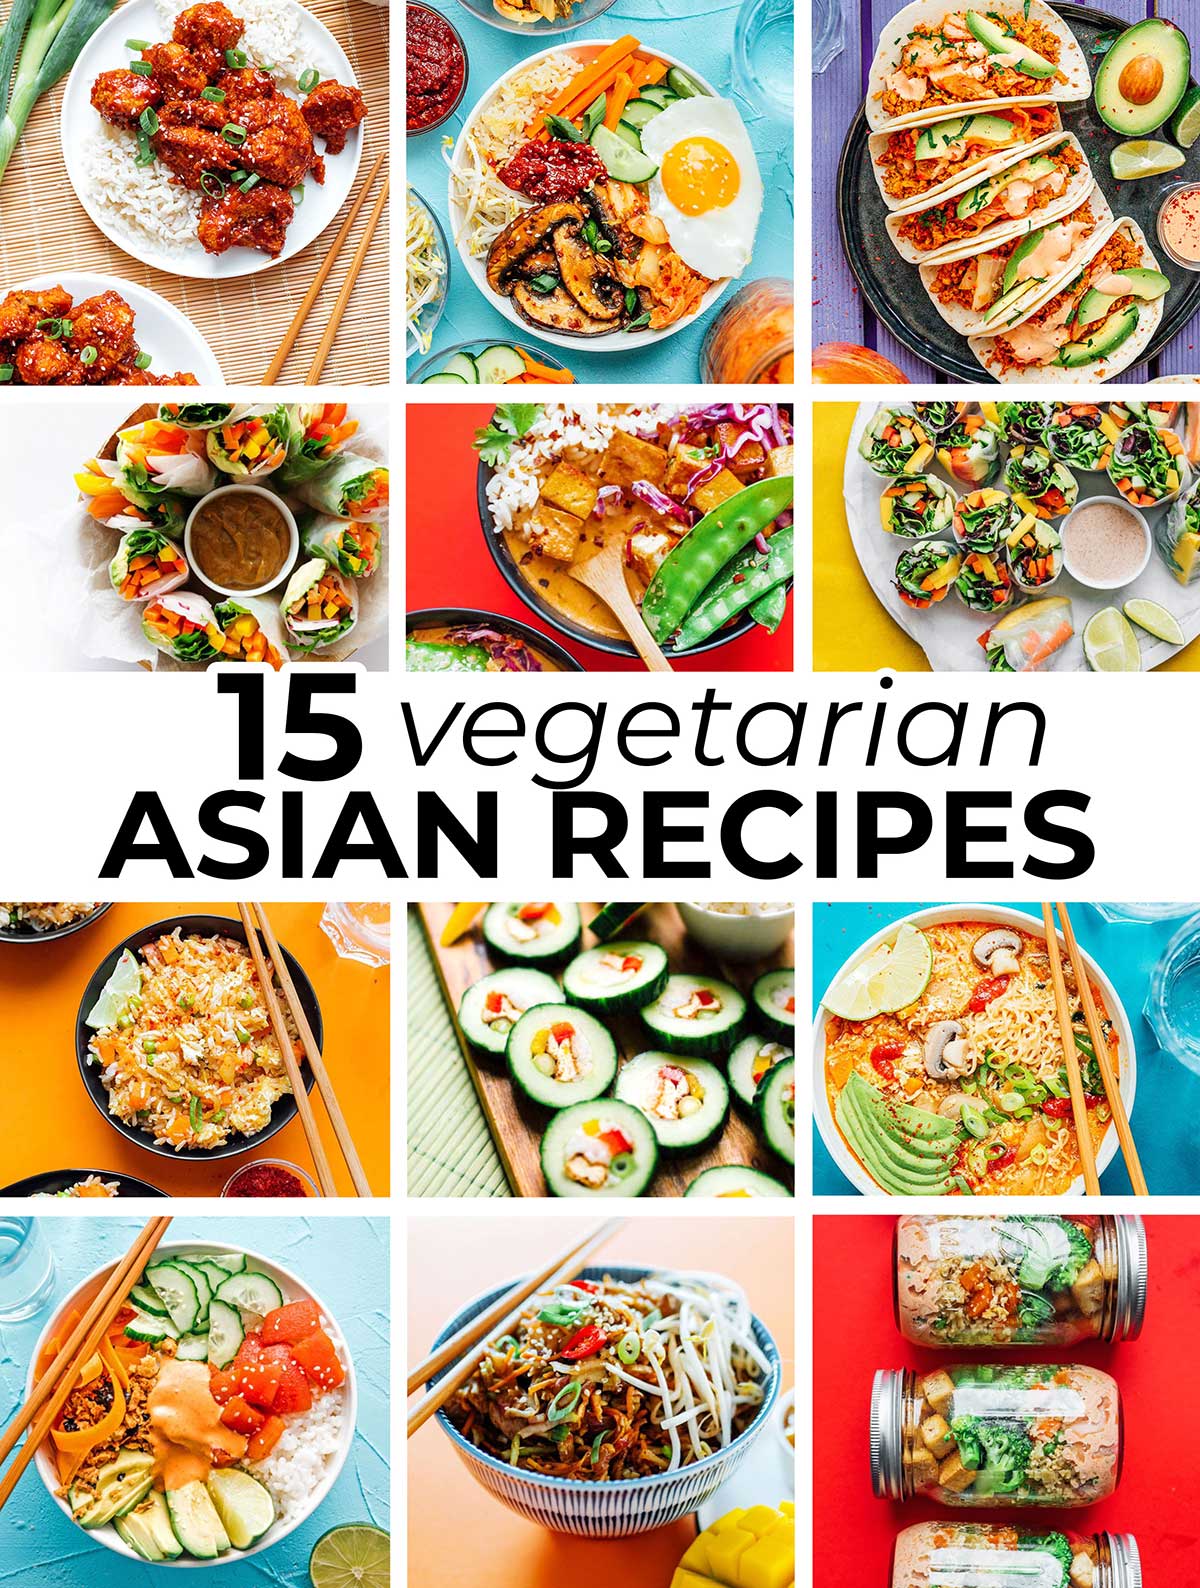 https://www.liveeatlearn.com/wp-content/uploads/2020/03/vegetarian-asian-recipes.jpg